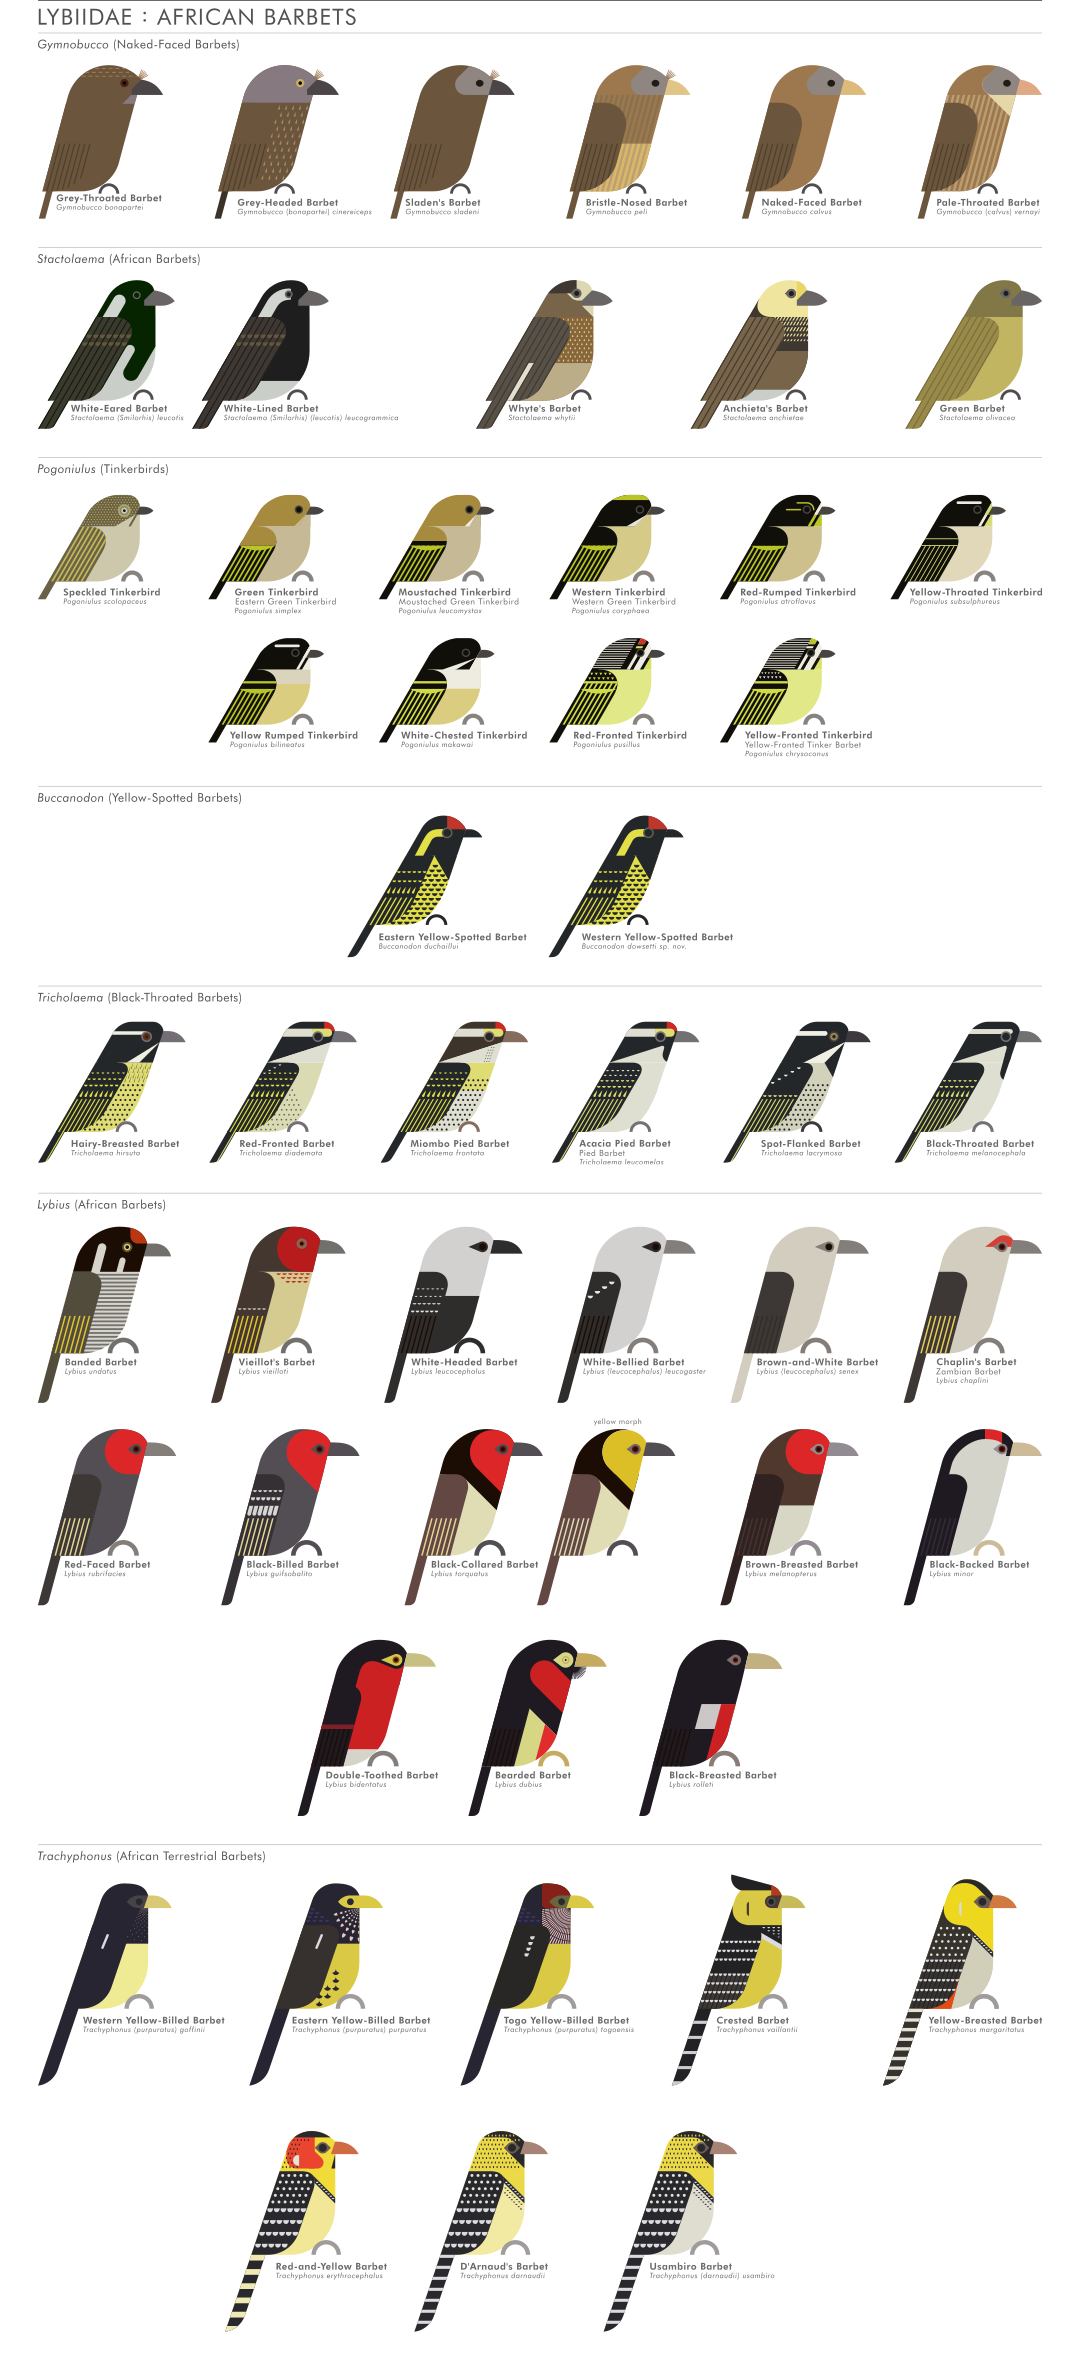 scott partridge - ave - avian vector encyclopedia - african barbets Lybiidae piciformes - vector bird art